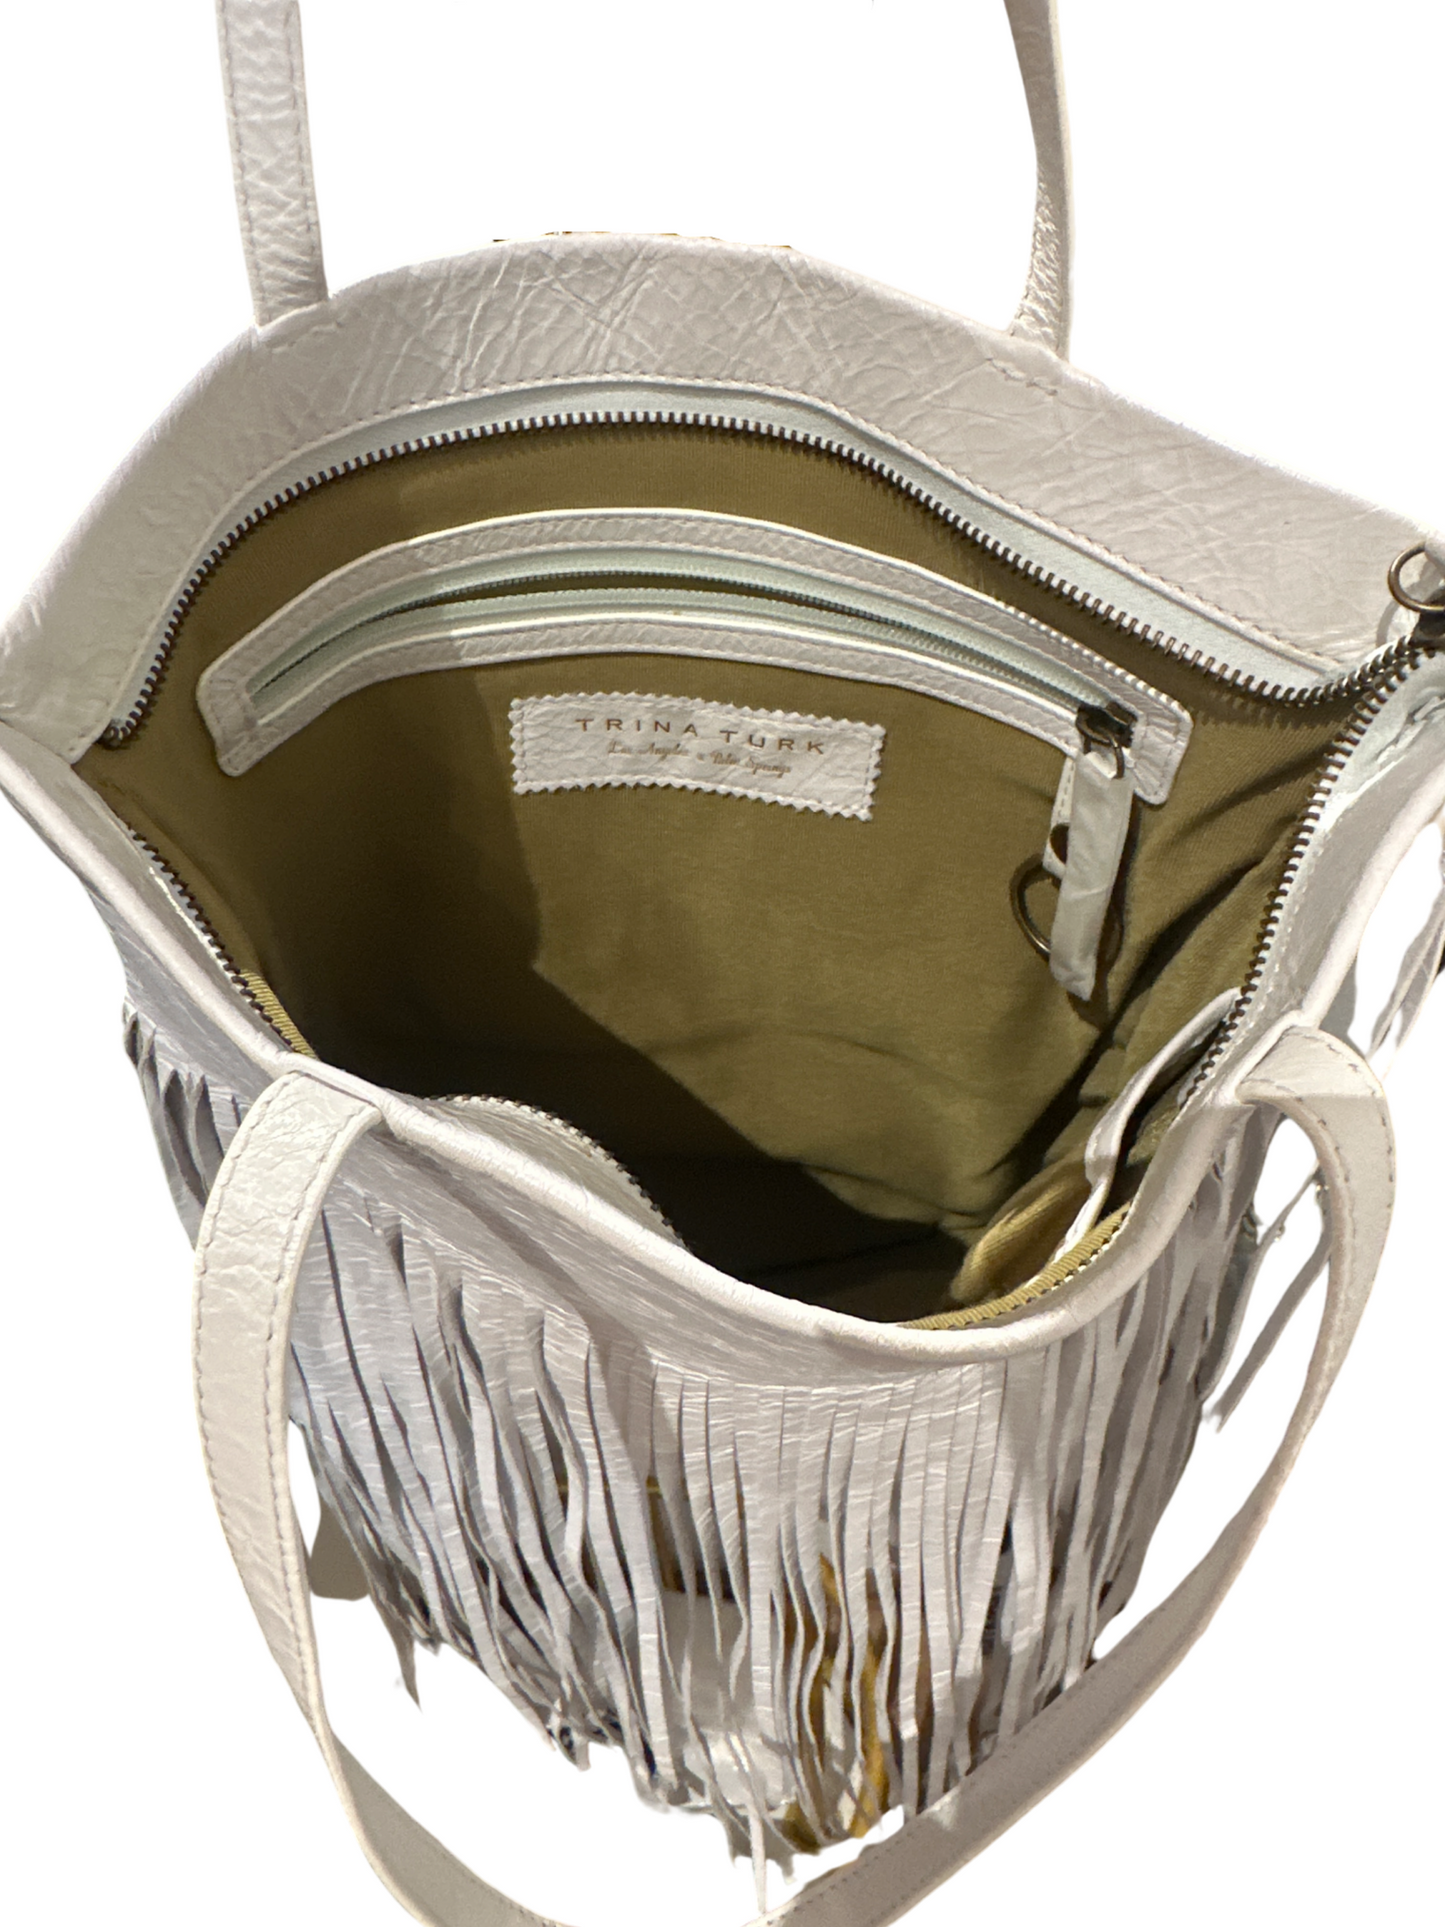 Trinaa Turk white fringe shoulder purse